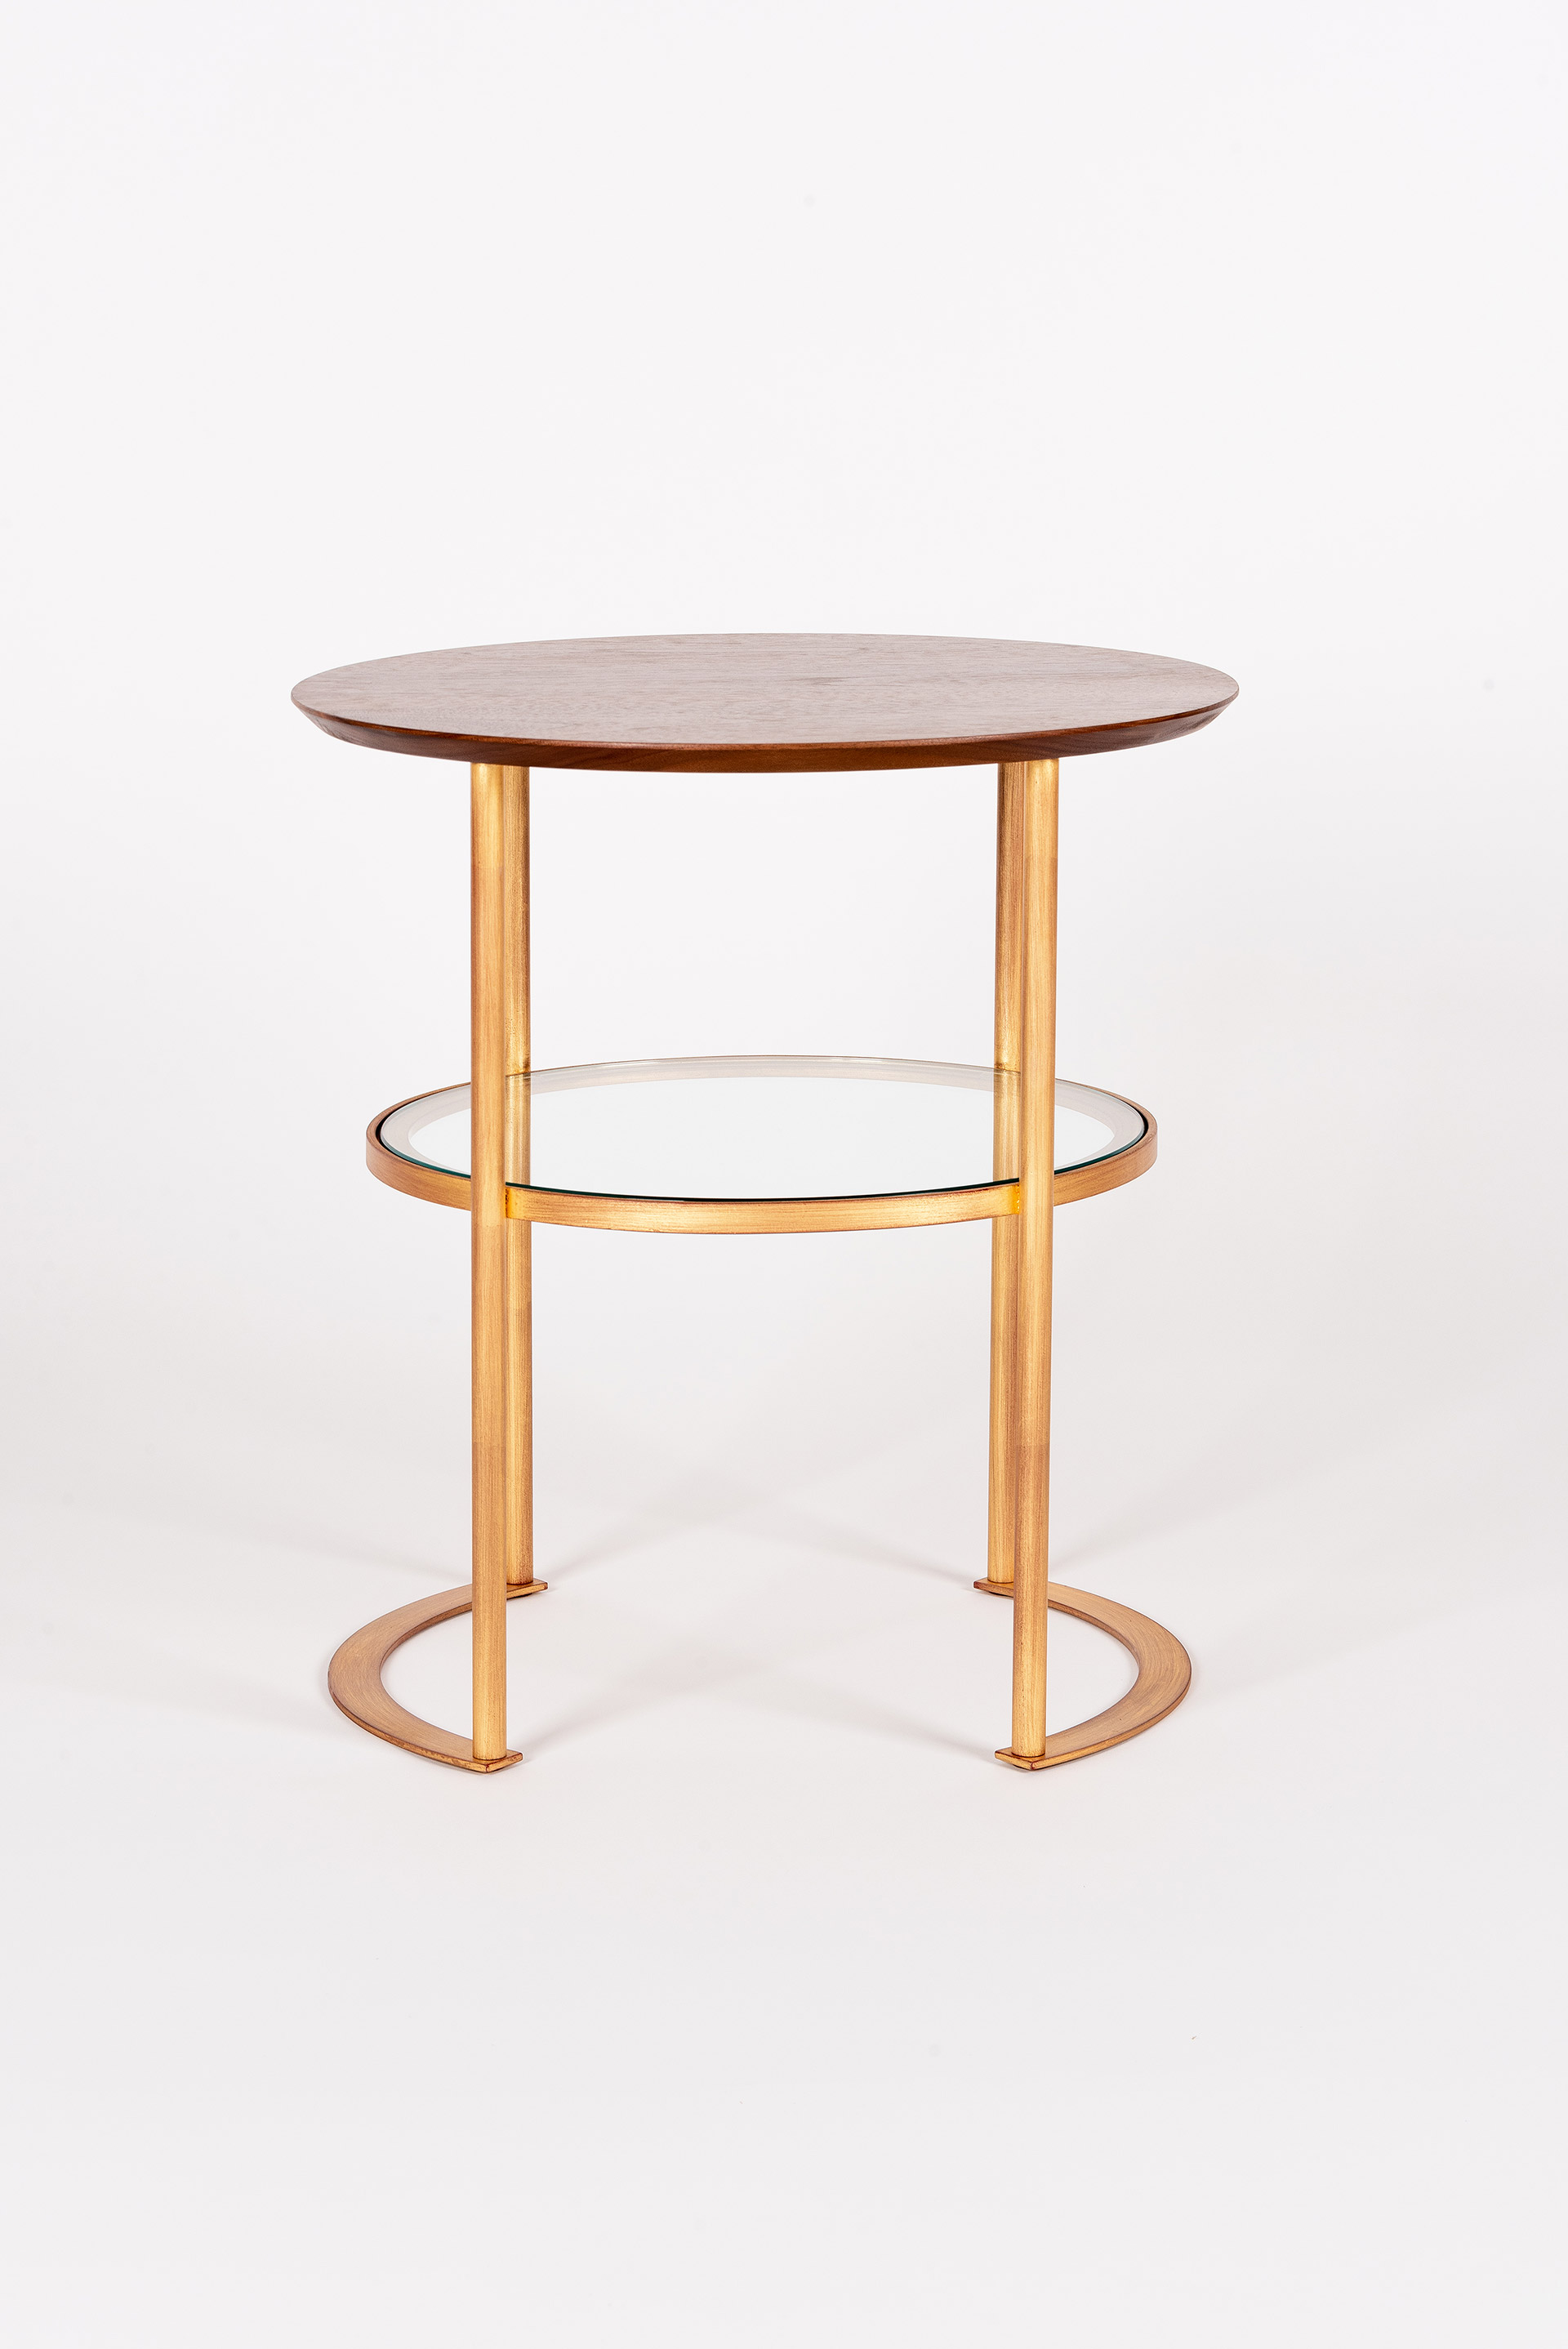 OCTANT Side Table by Borella Art Design